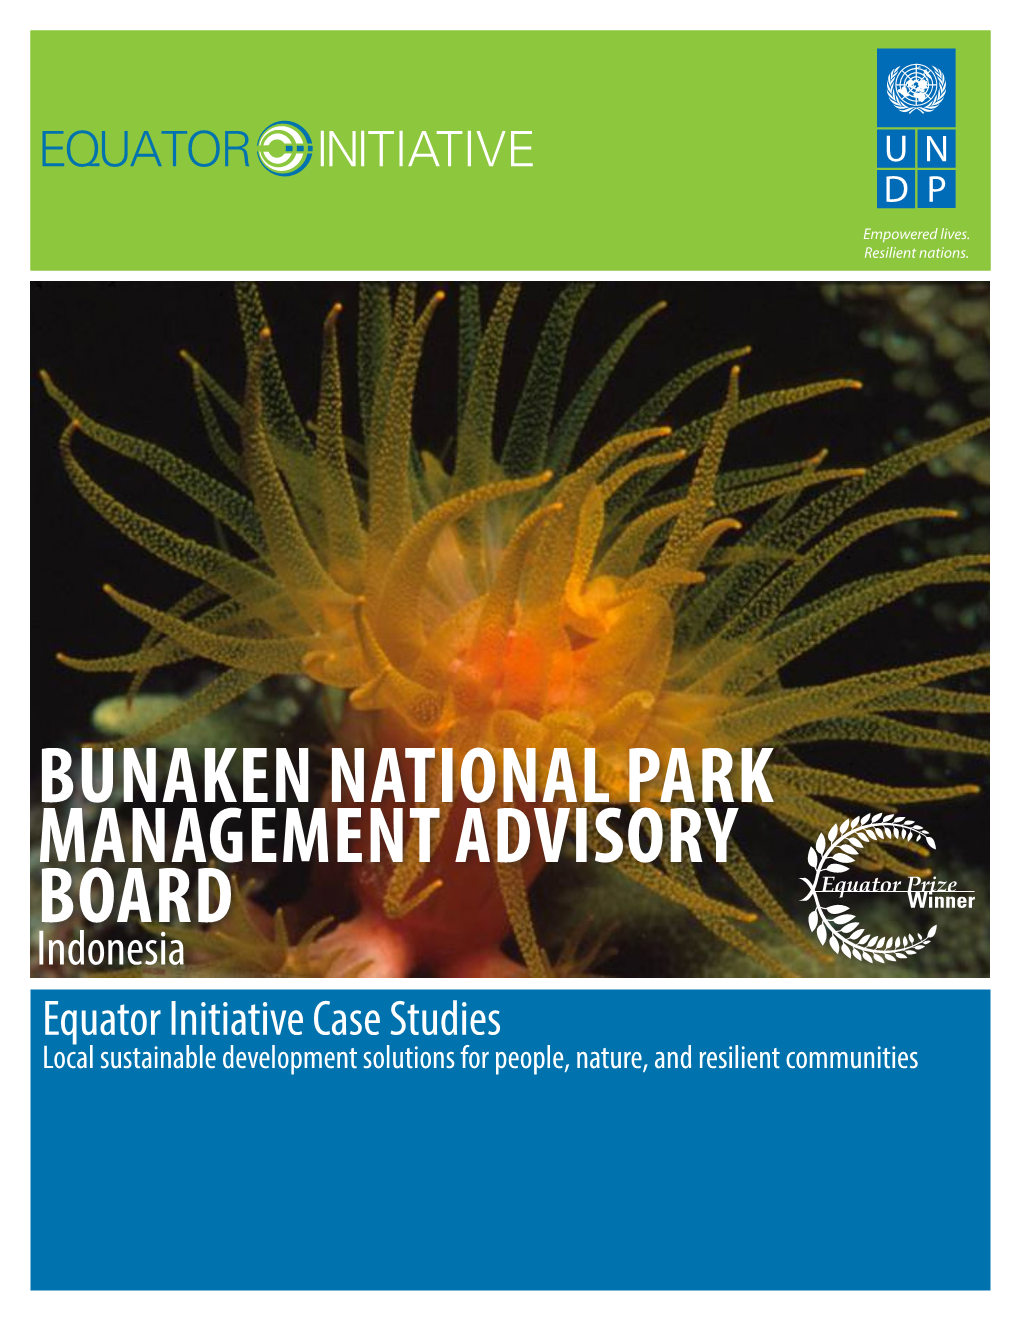 BNPMAB, Bunaken National Park Management Advisory Board